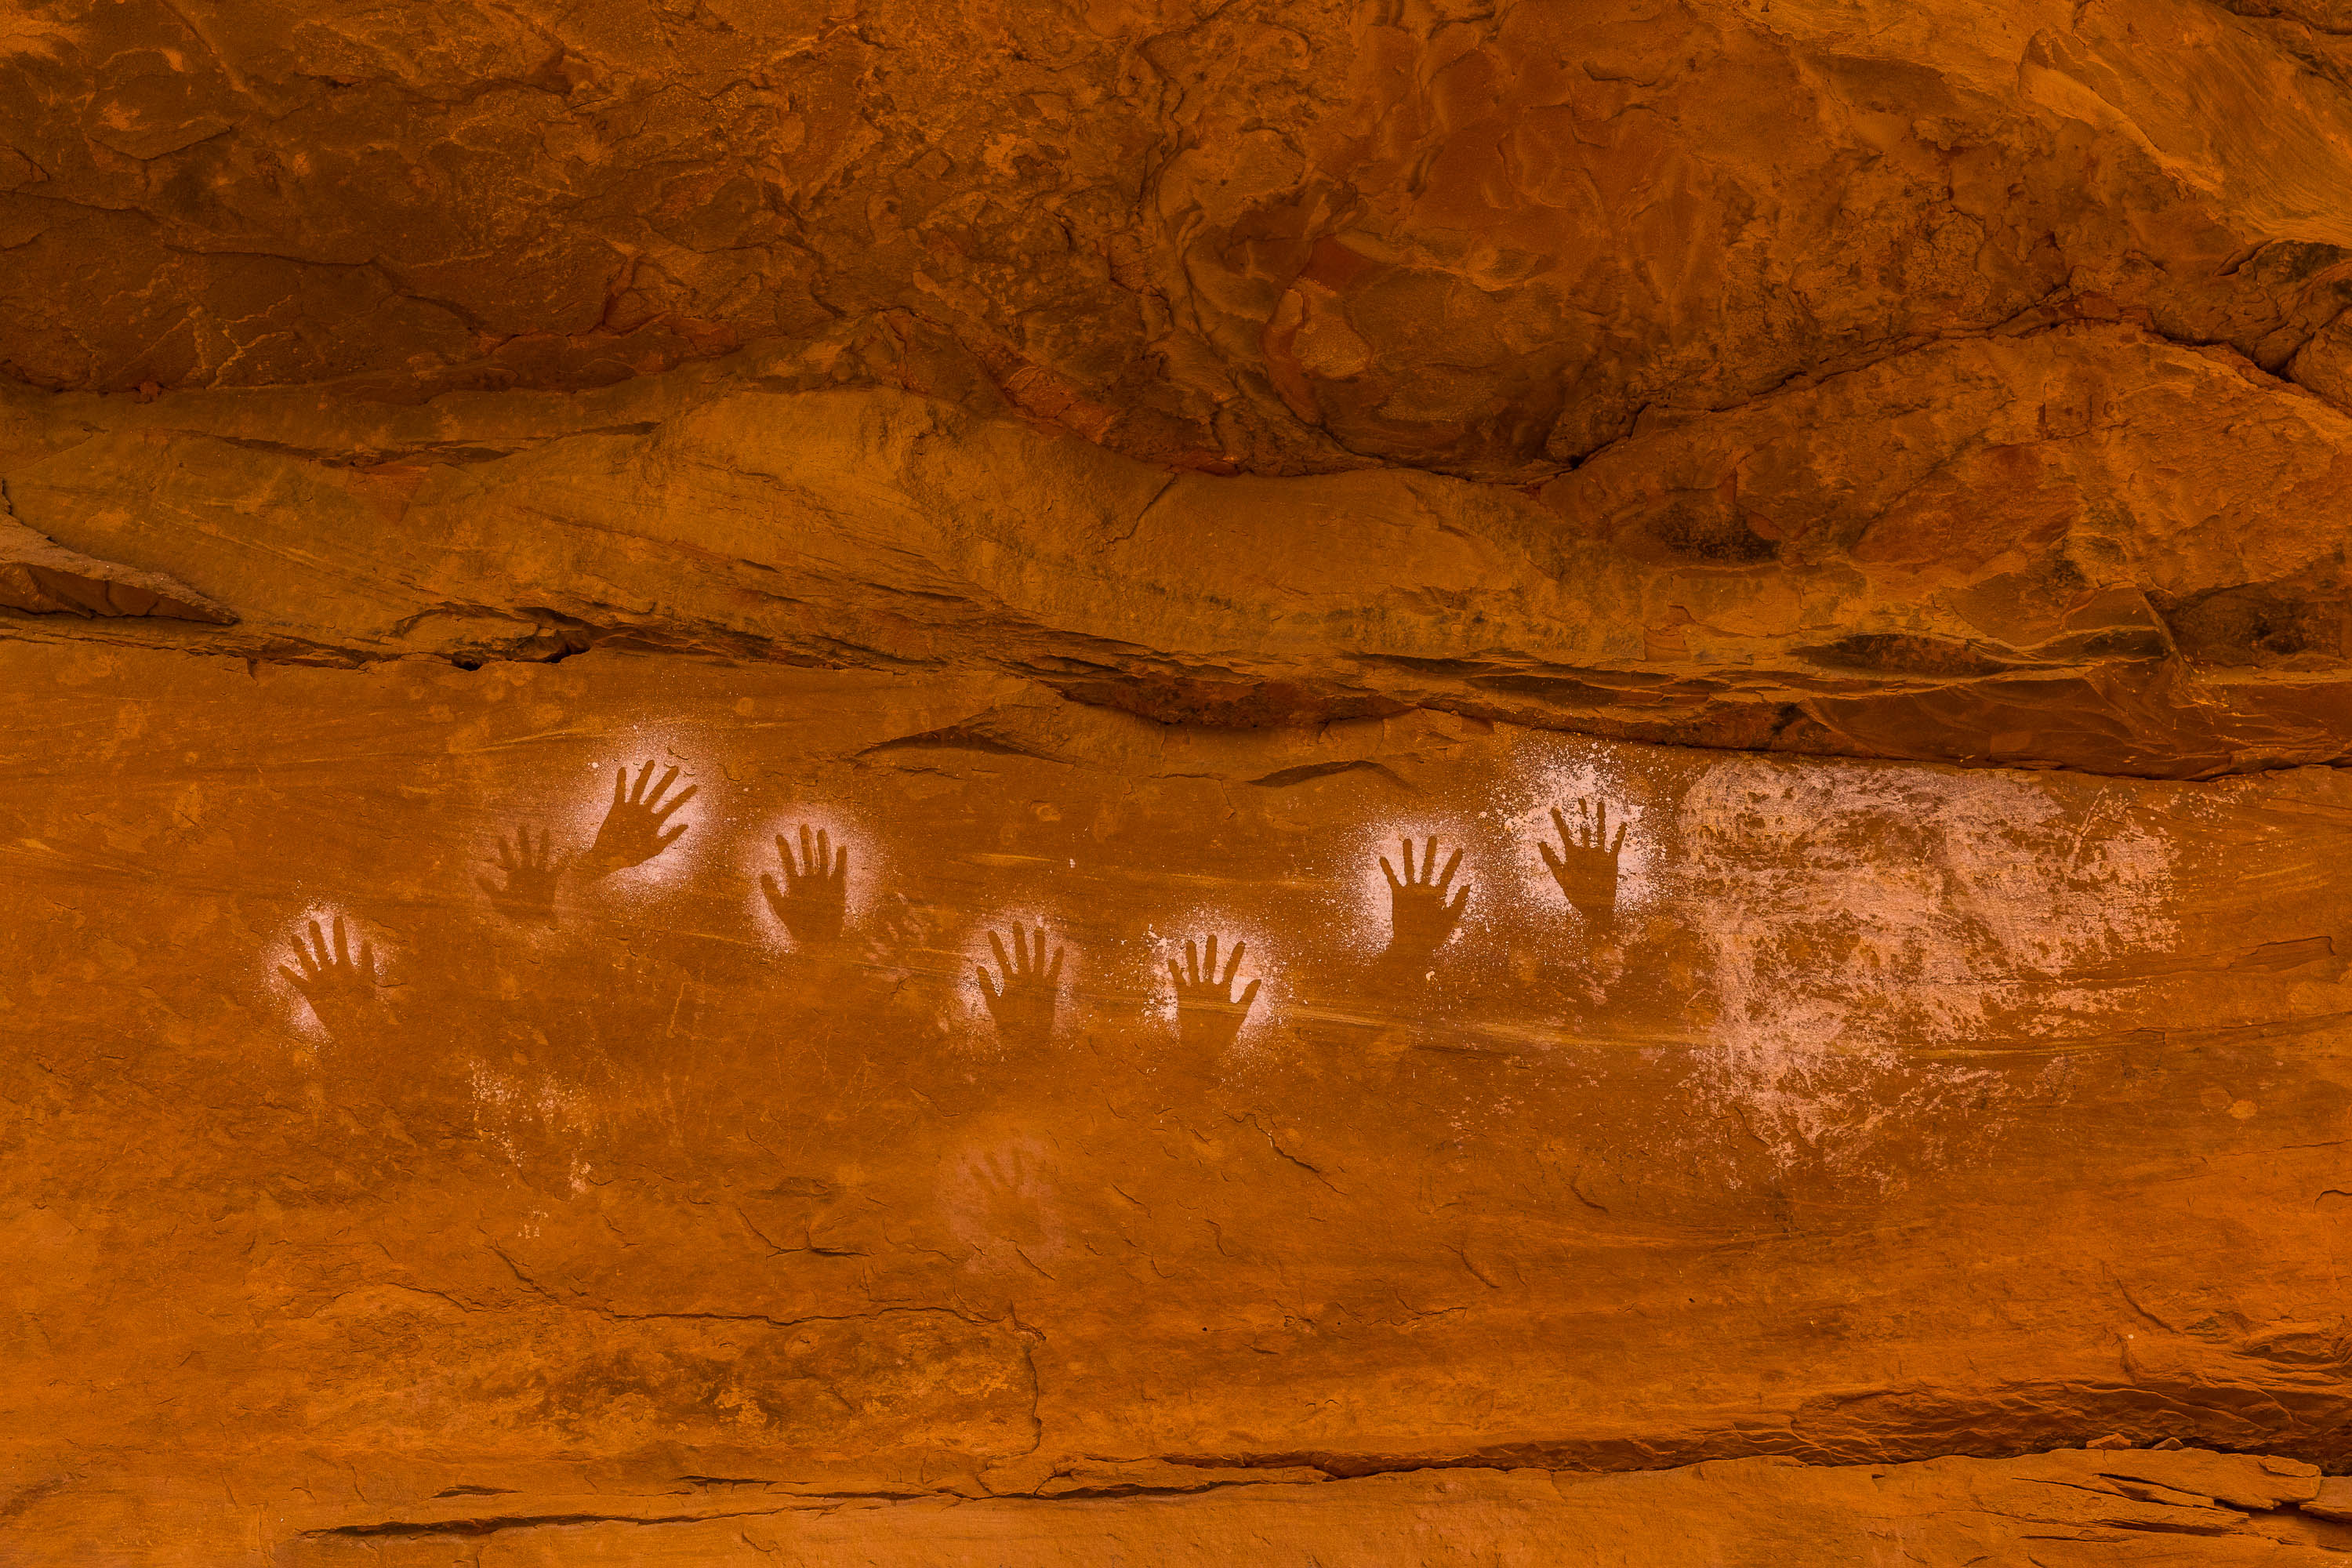 handprints are symbols in Utah